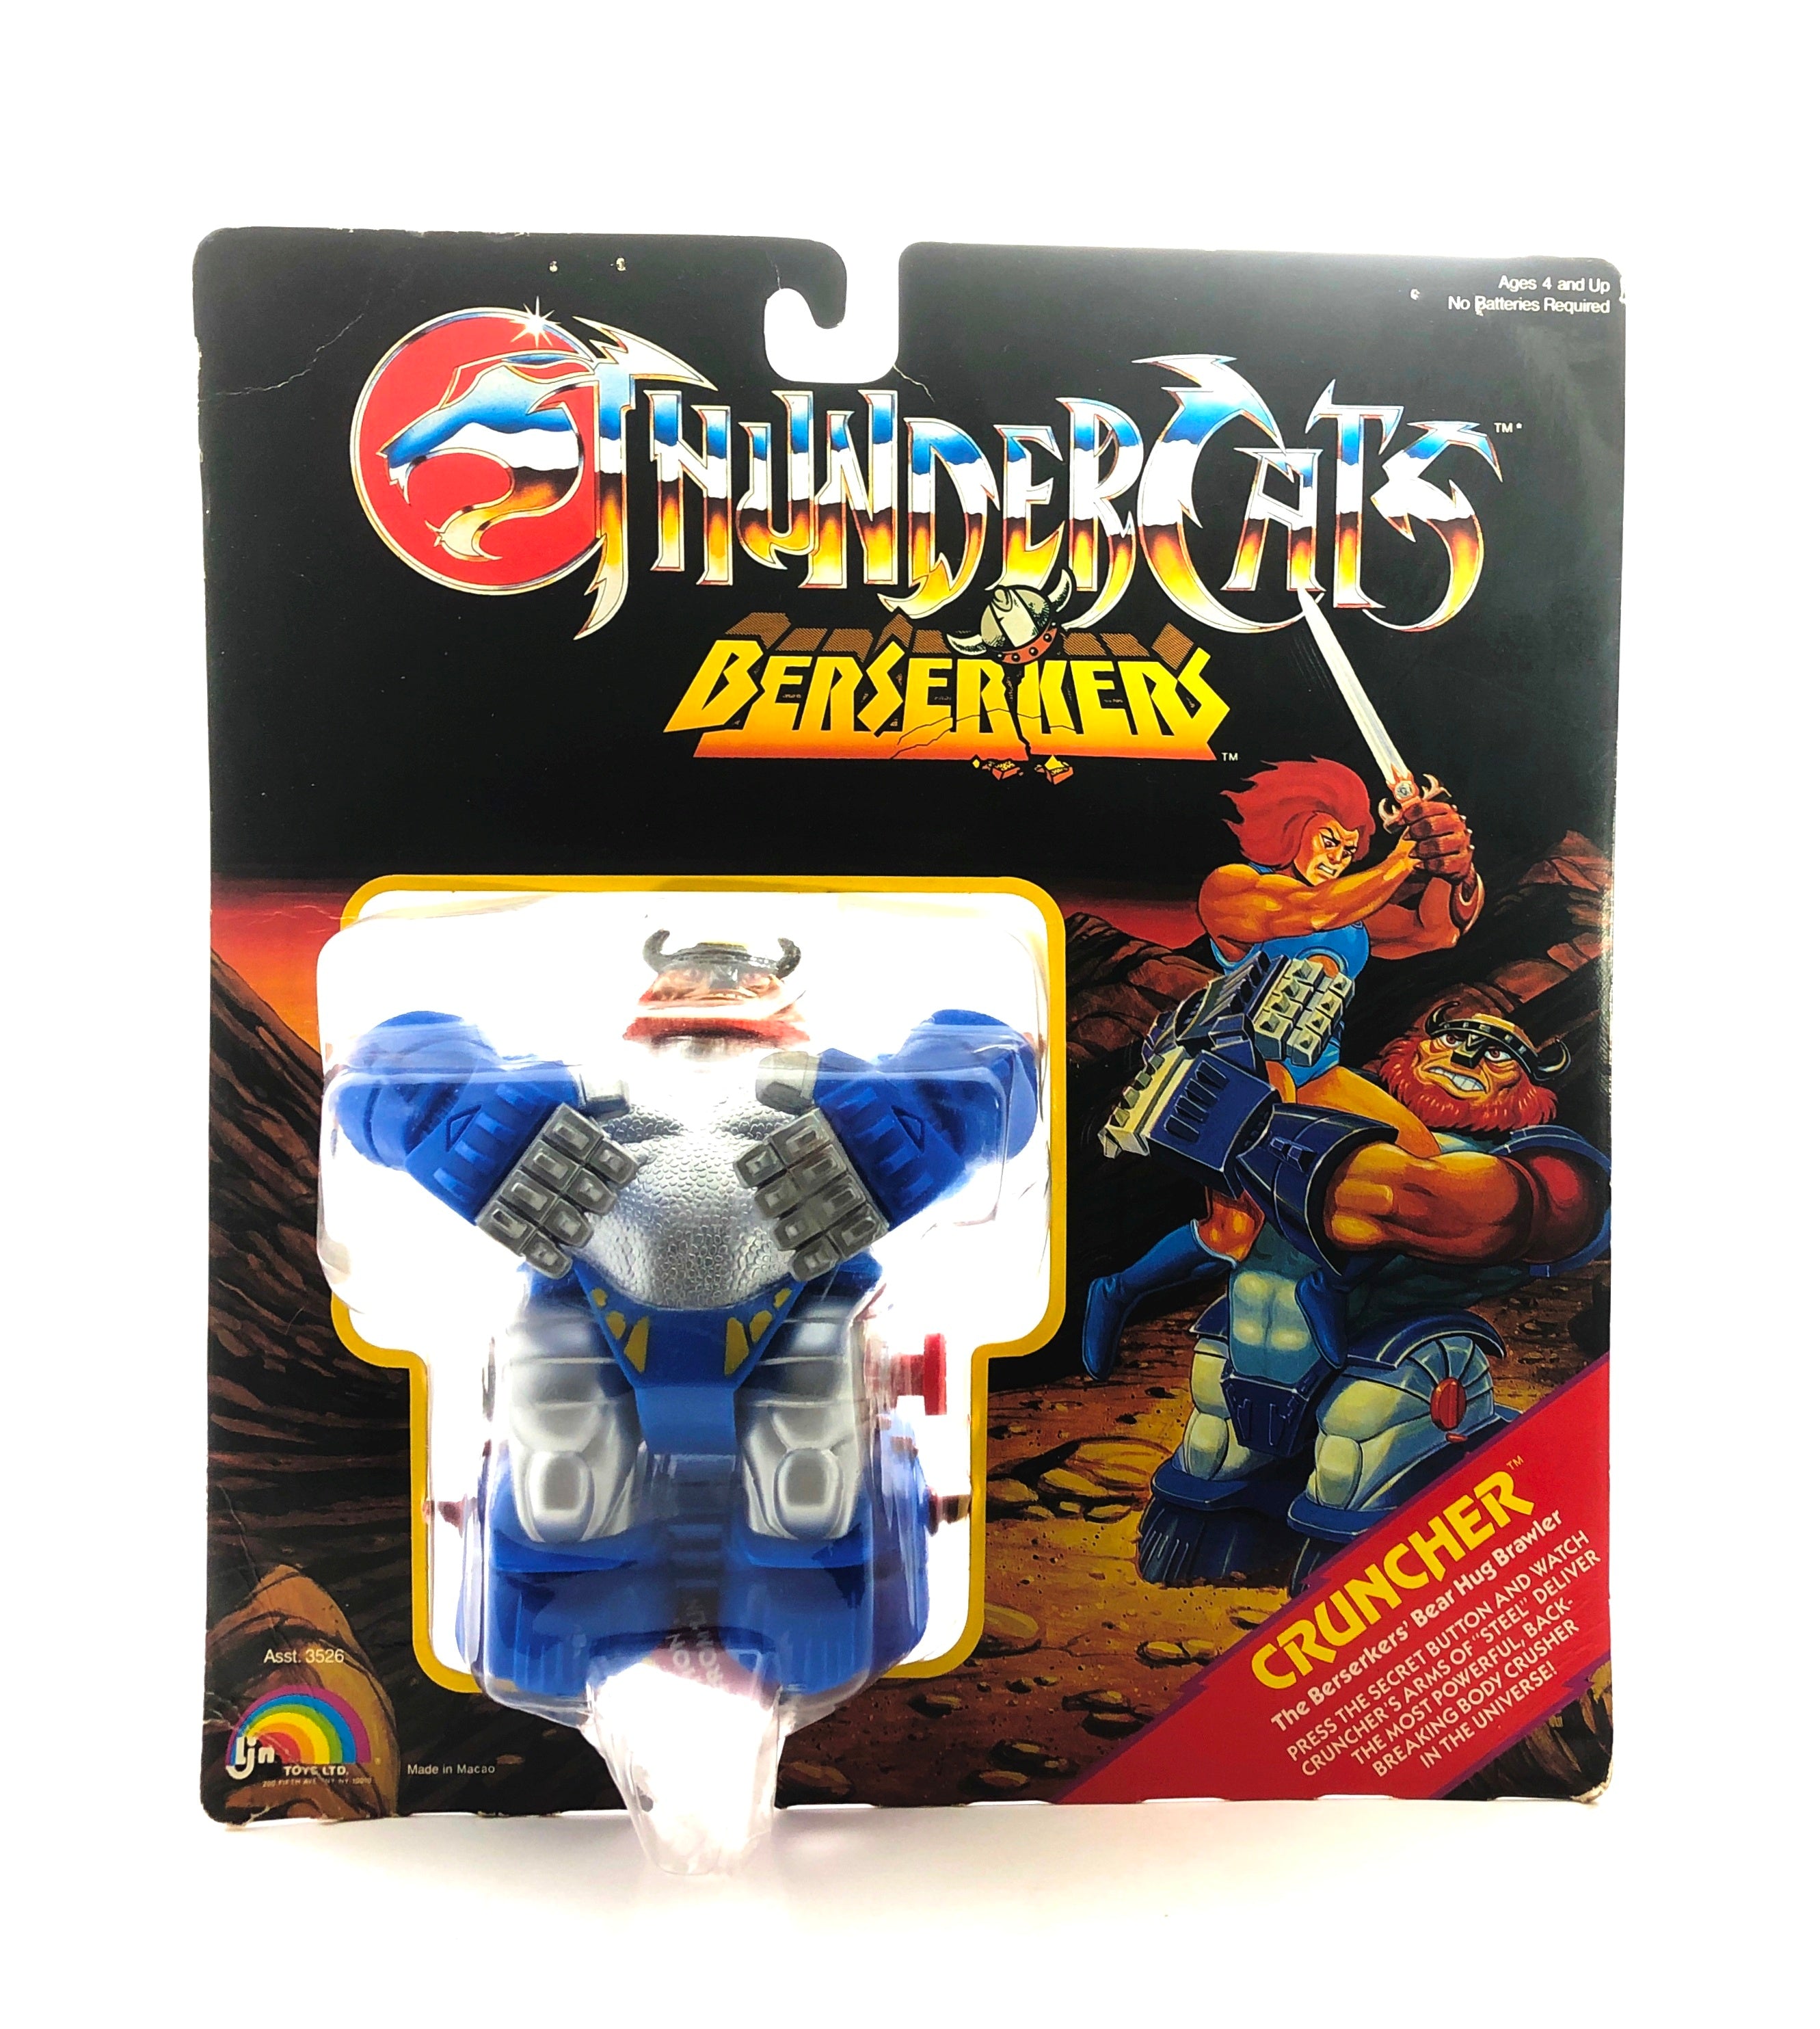 Thundercats: Berserkers Cruncher (LJN, 1986)